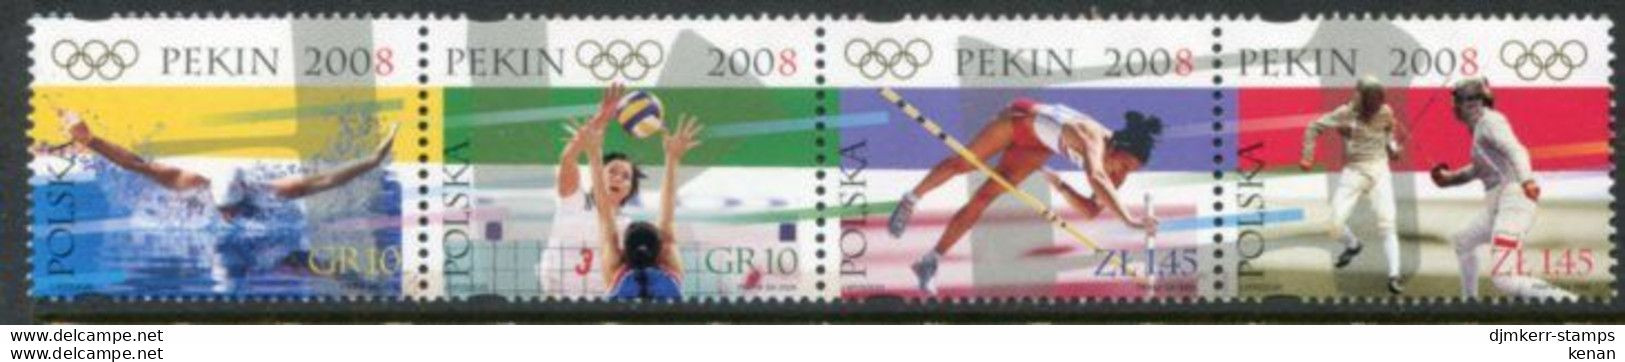 Poland, 2008, Mi: 4368/71 (MNH) - Unused Stamps